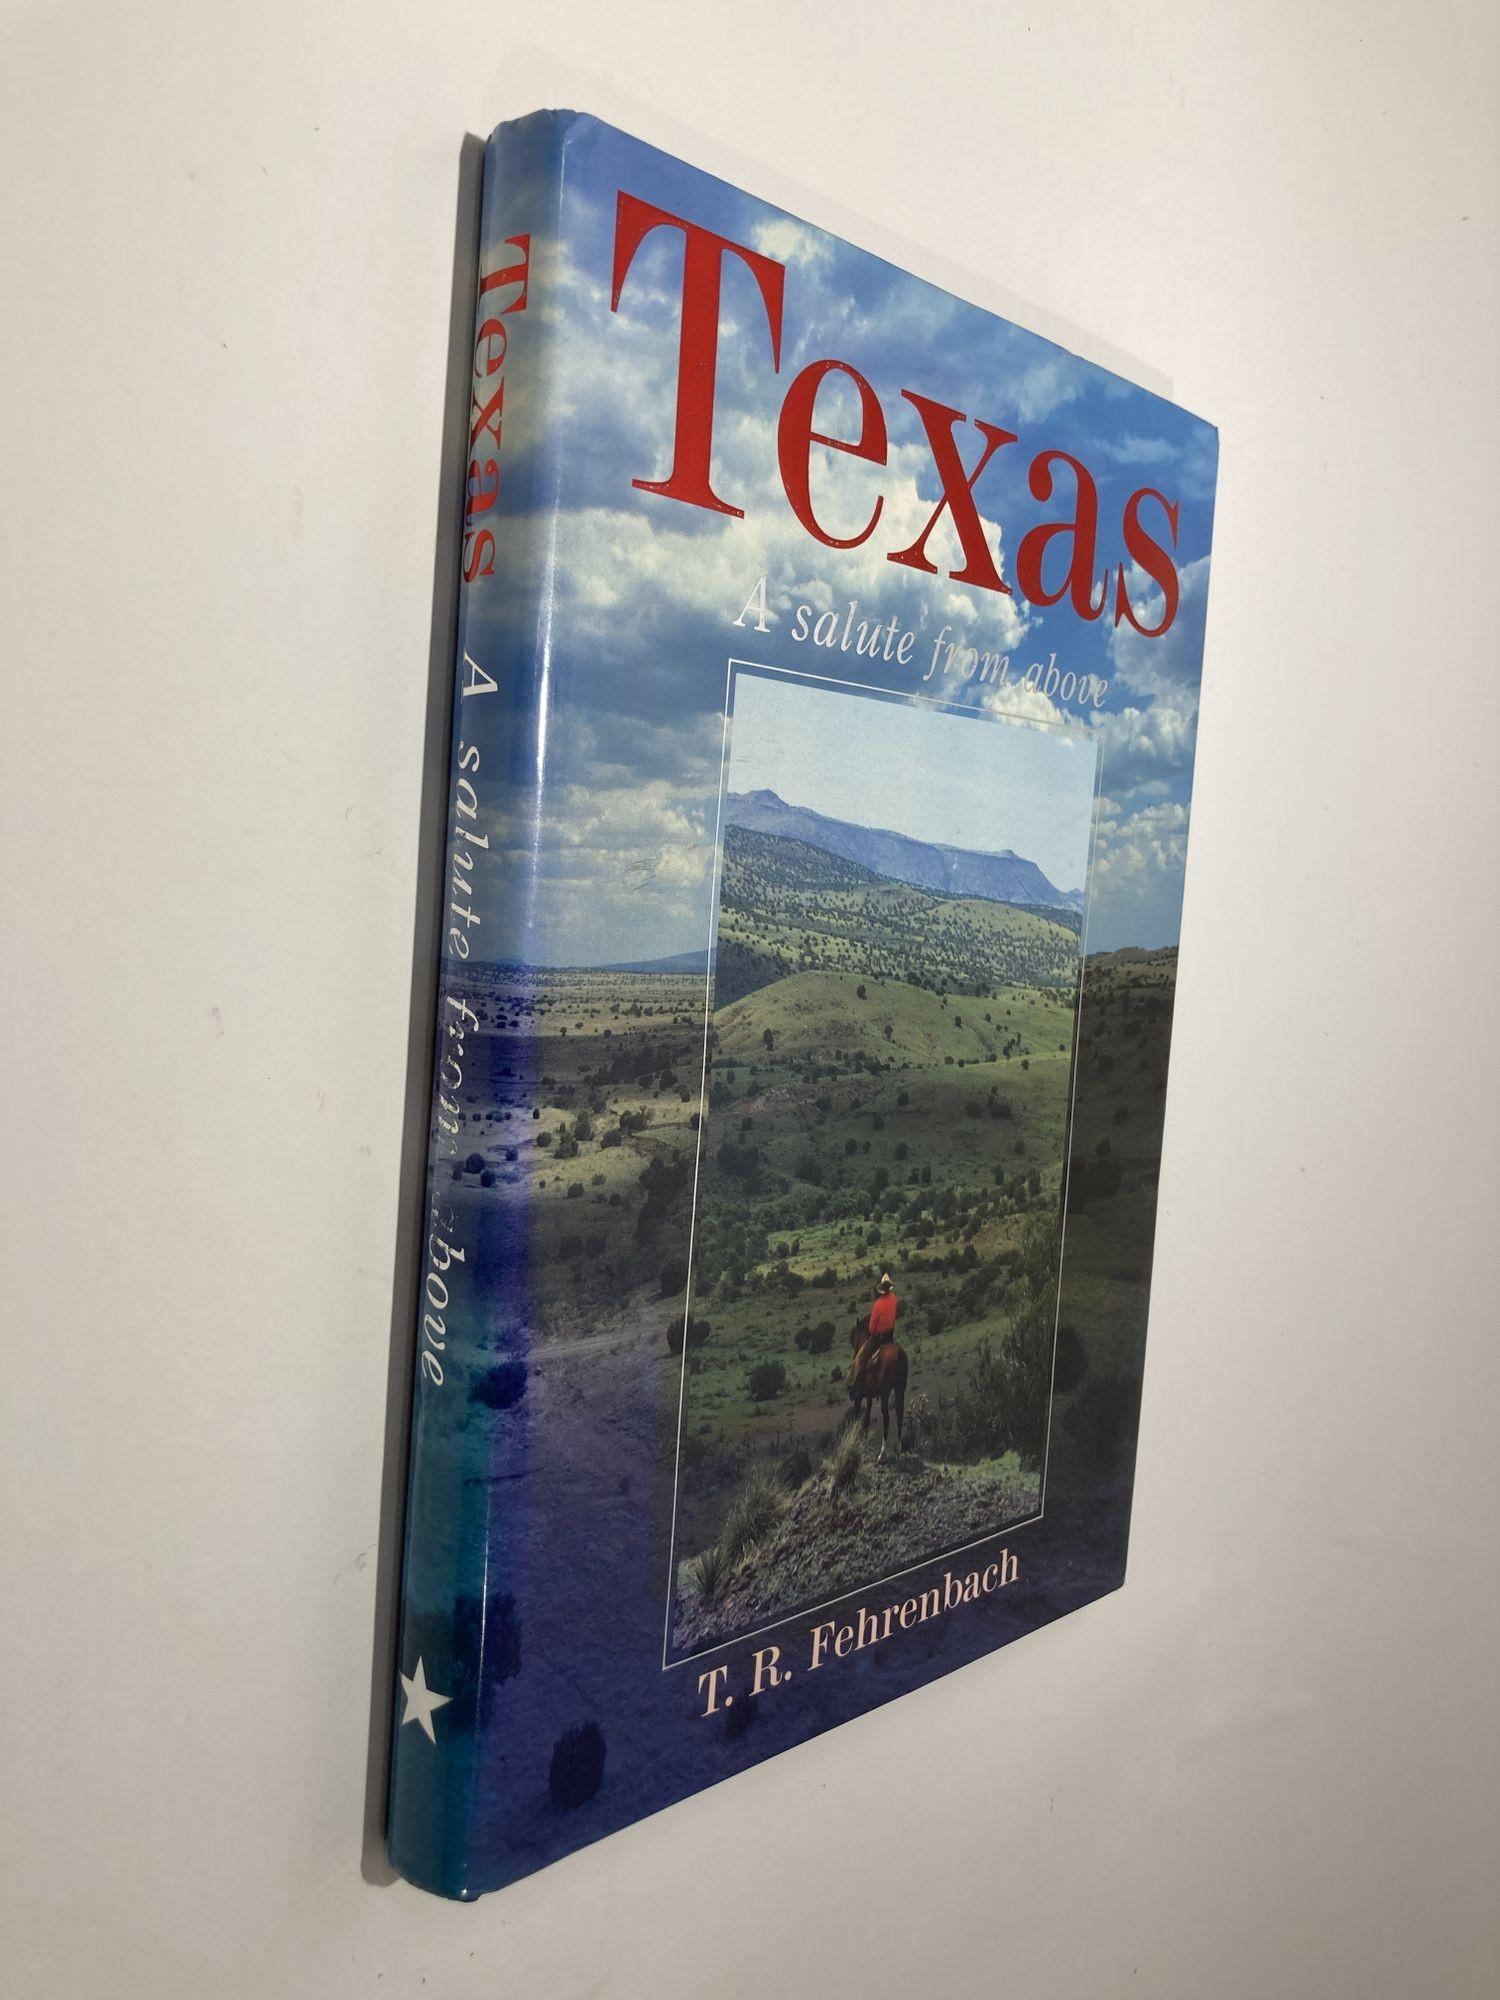 Texas a Salute from Above Fehrenbach, T. R. 1985 (Amerikanische Klassik) im Angebot